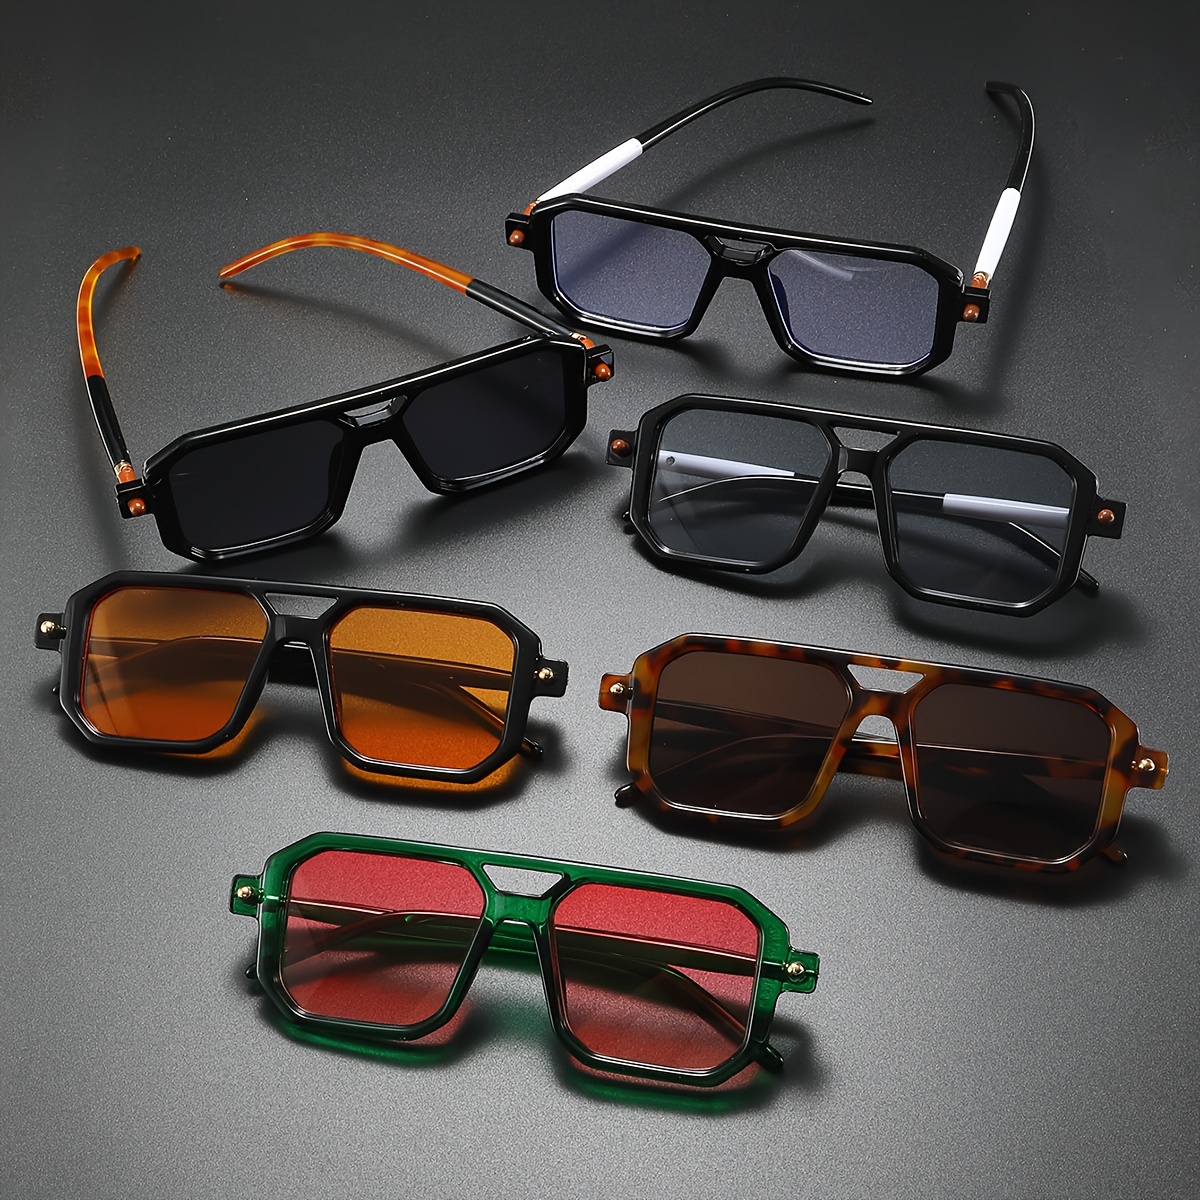 

6pcs Retro Square 70s Double Beam Glasses For Women And Men Classic Retro Fashion Frames Glasses